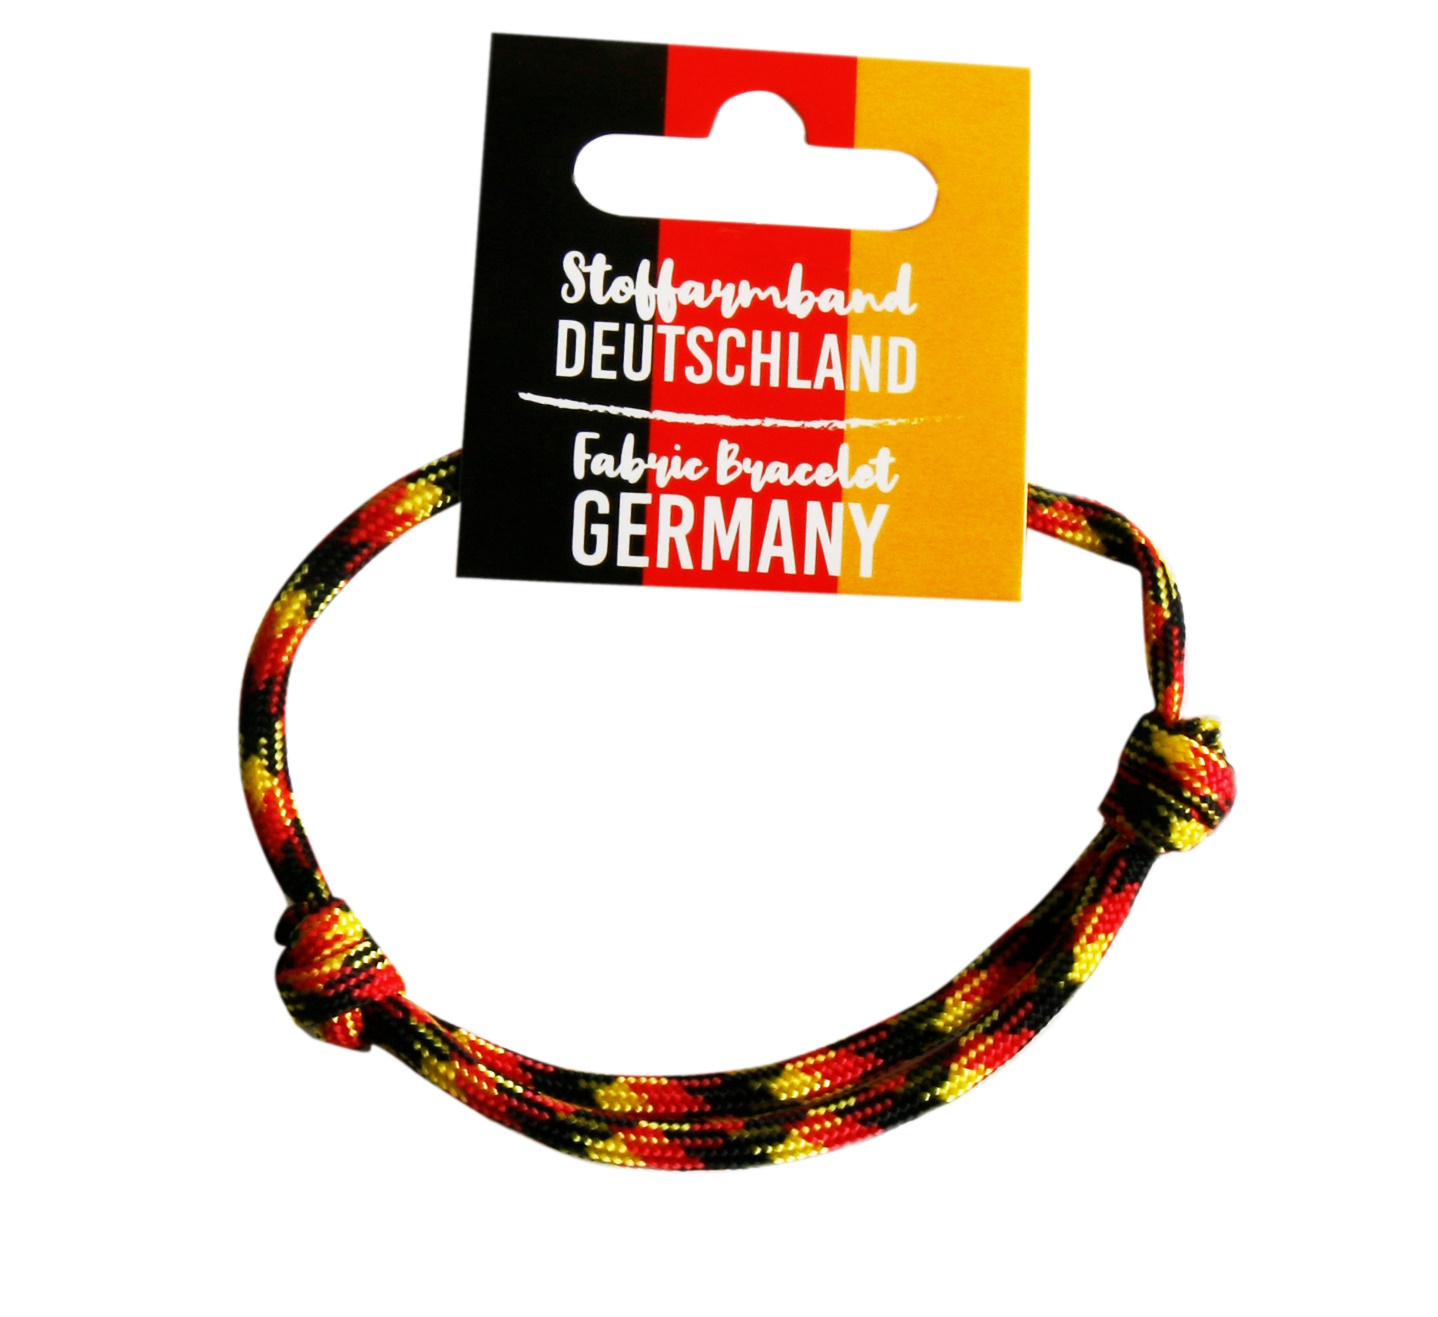 https://www.adapterland.de/images/product_images/original_images/armband_stoffarmband_deutschland_fanartikel.jpg